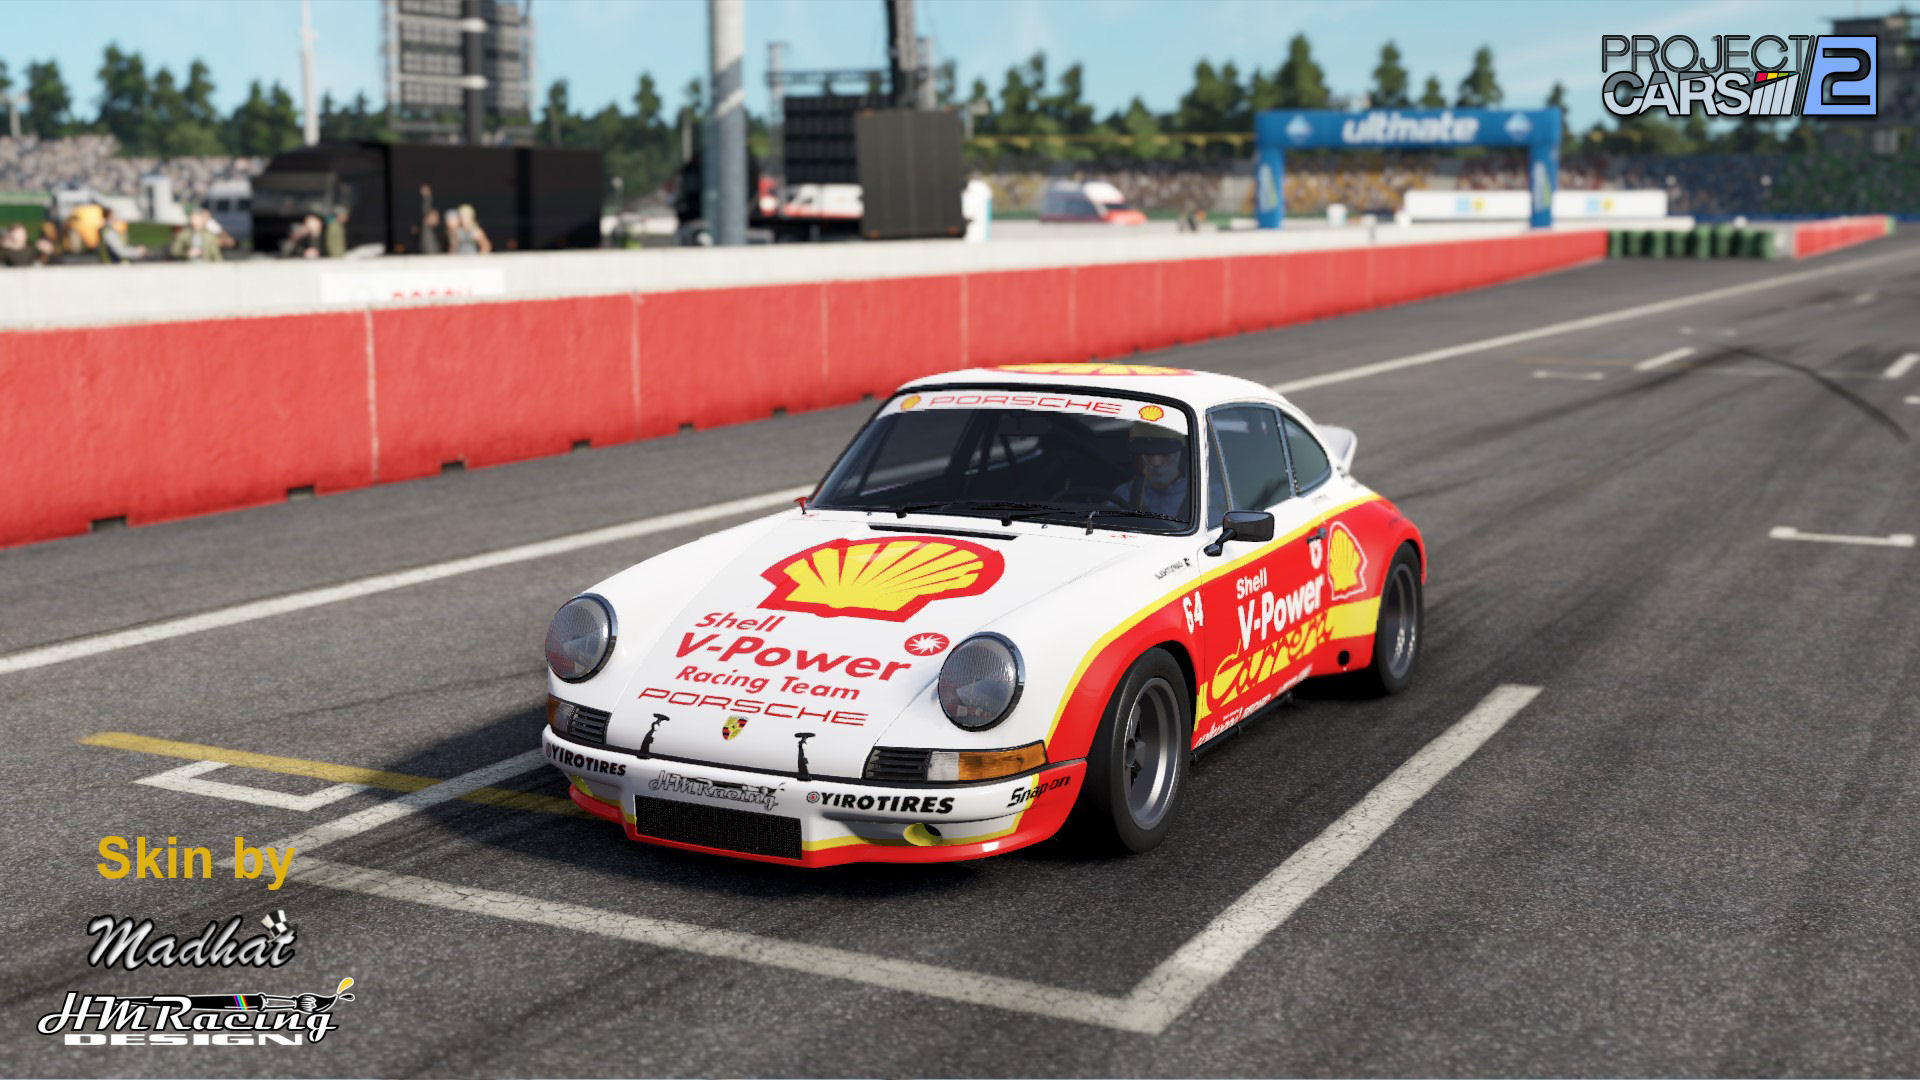 Shell Porsche 911 rsr73 V201.jpg